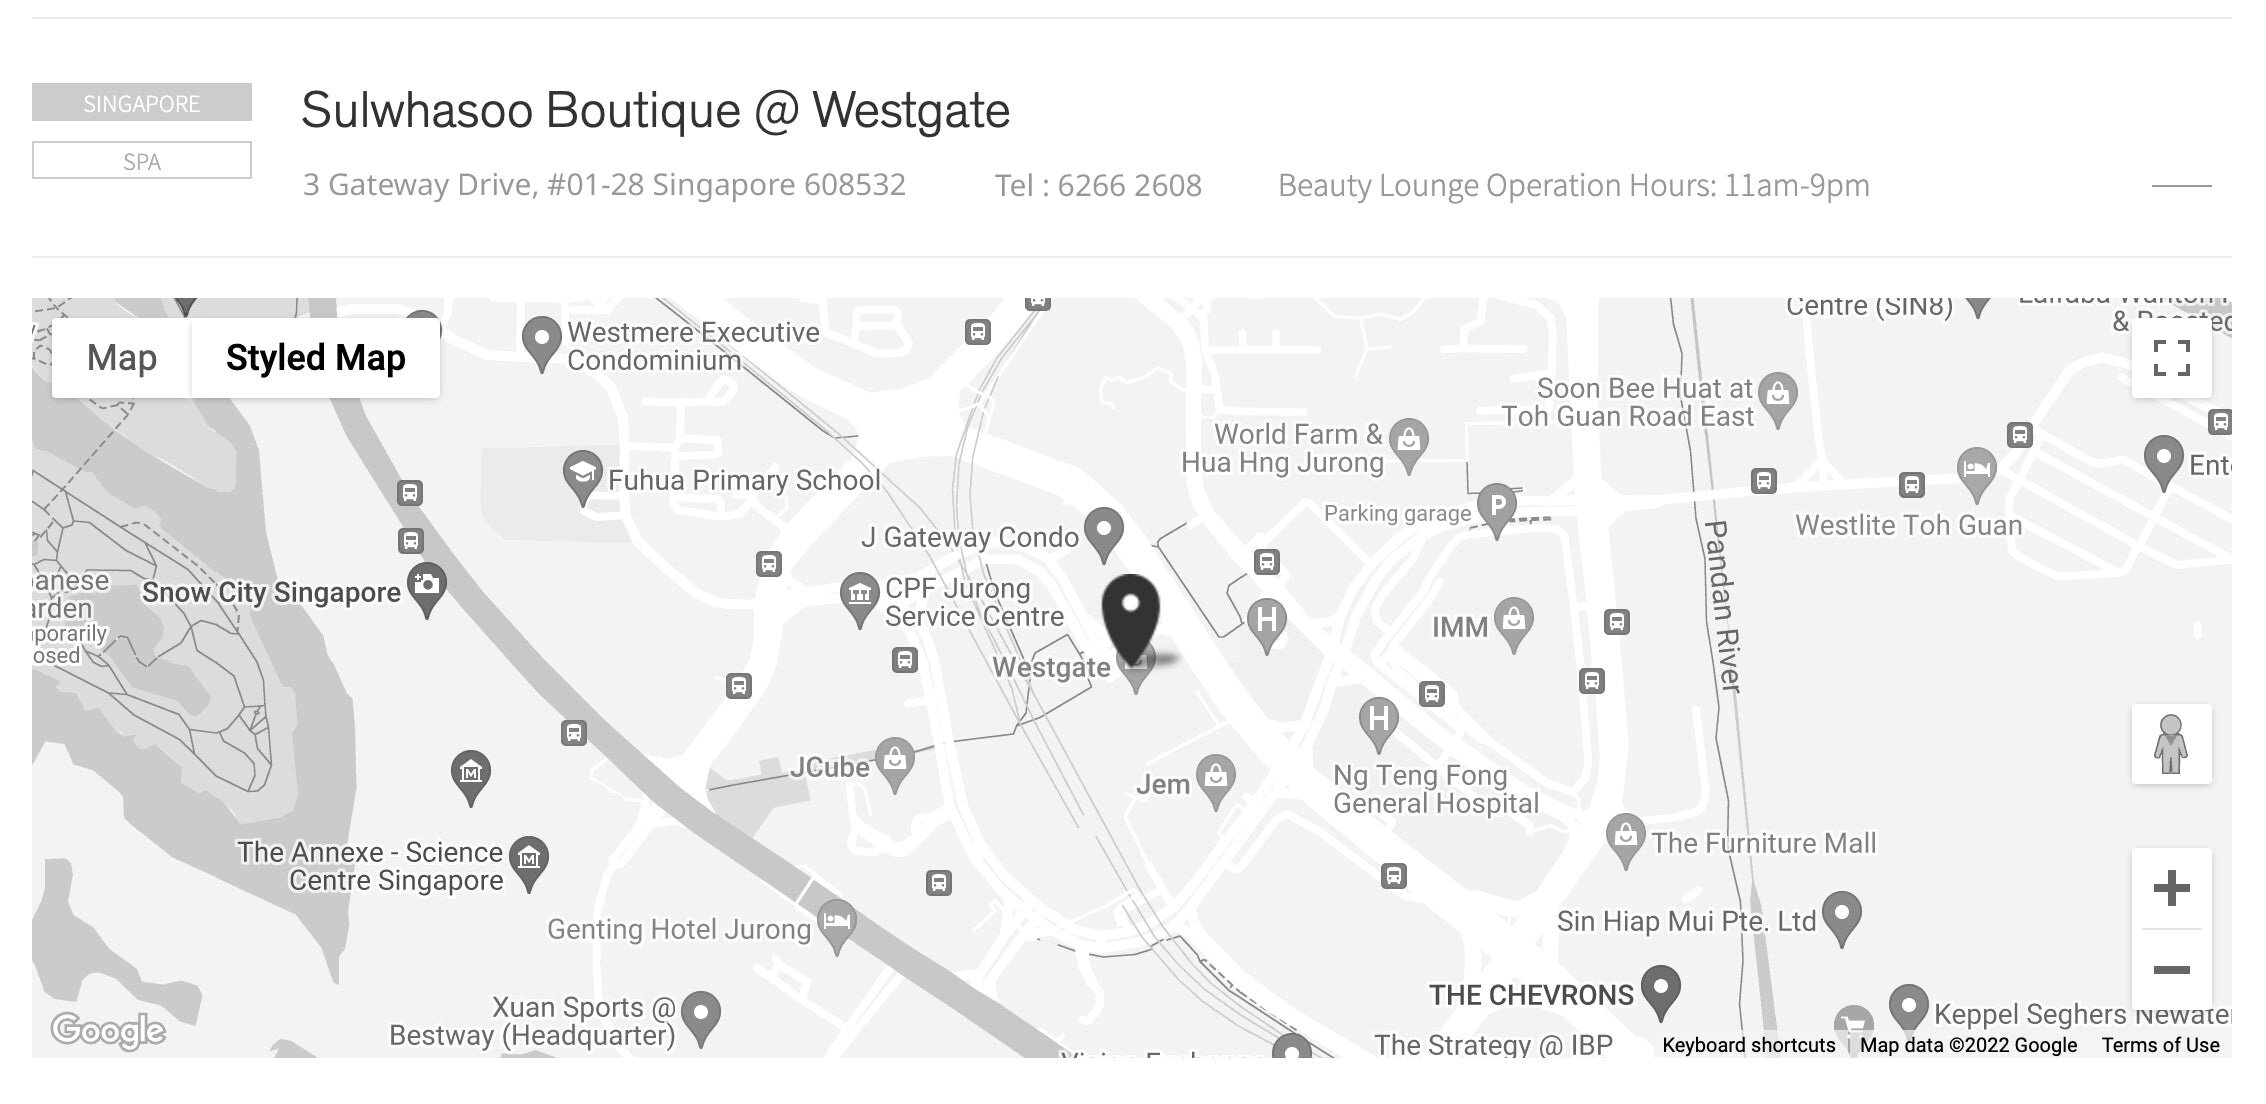 Sulwhasoo Boutique @ Westgate/3 Gateway Drive, #01-28 Singapore 608532/Tel:62662608 / Beauty Lounge Operation Hours:11am-9pm